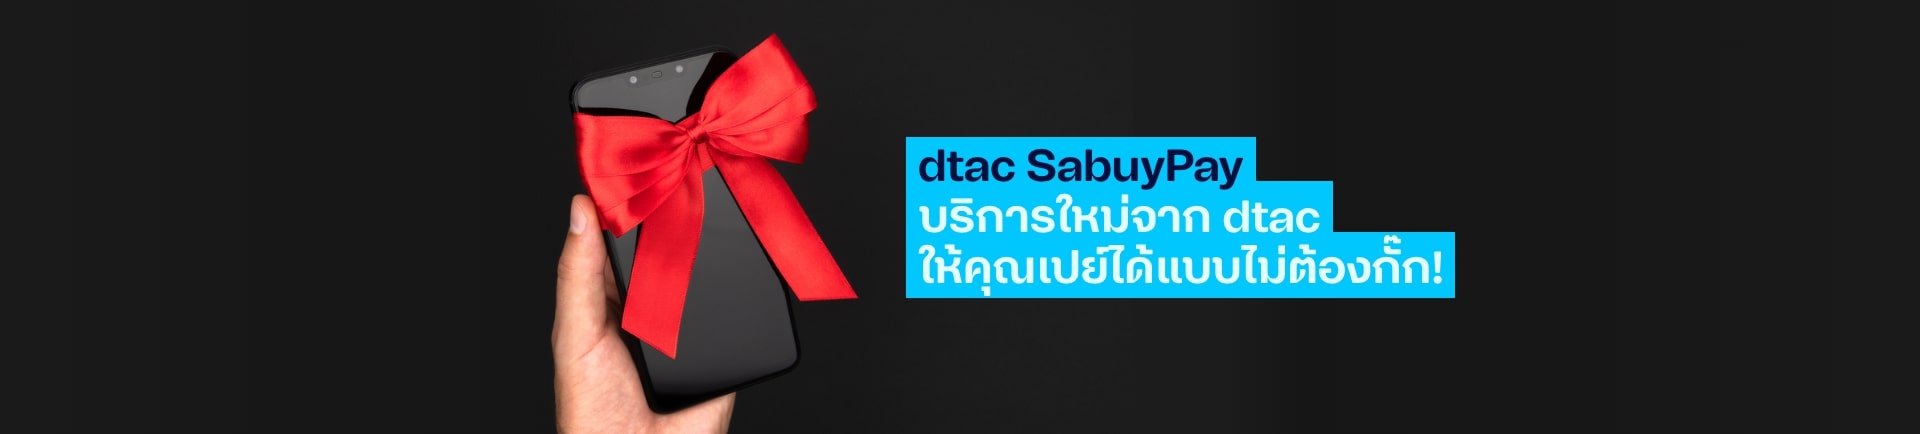 dtac SabuyPay บริการใหม่จาก dtac จ่ายง่าย เปย์สะดวก ในราคาสุดคุ้ม